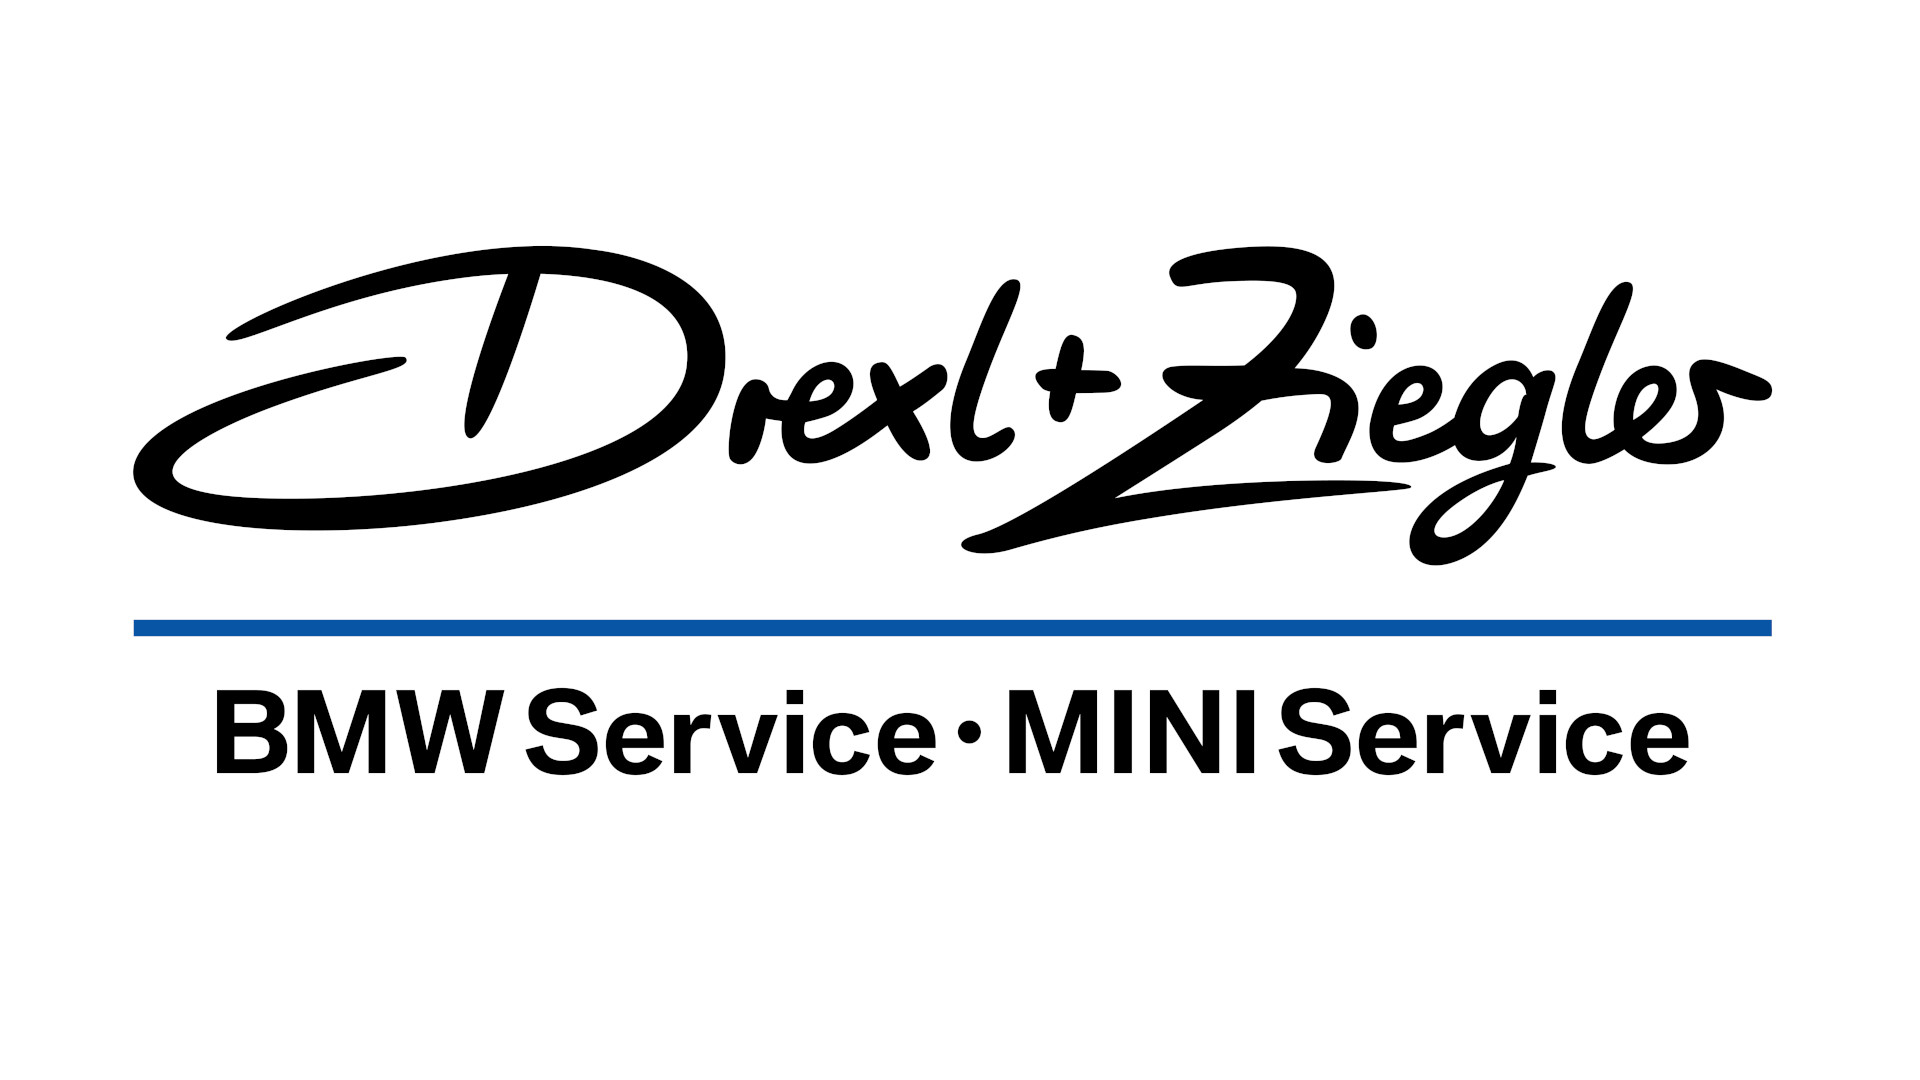 Drexl + Ziegler Mobility GmbH & Co. KG